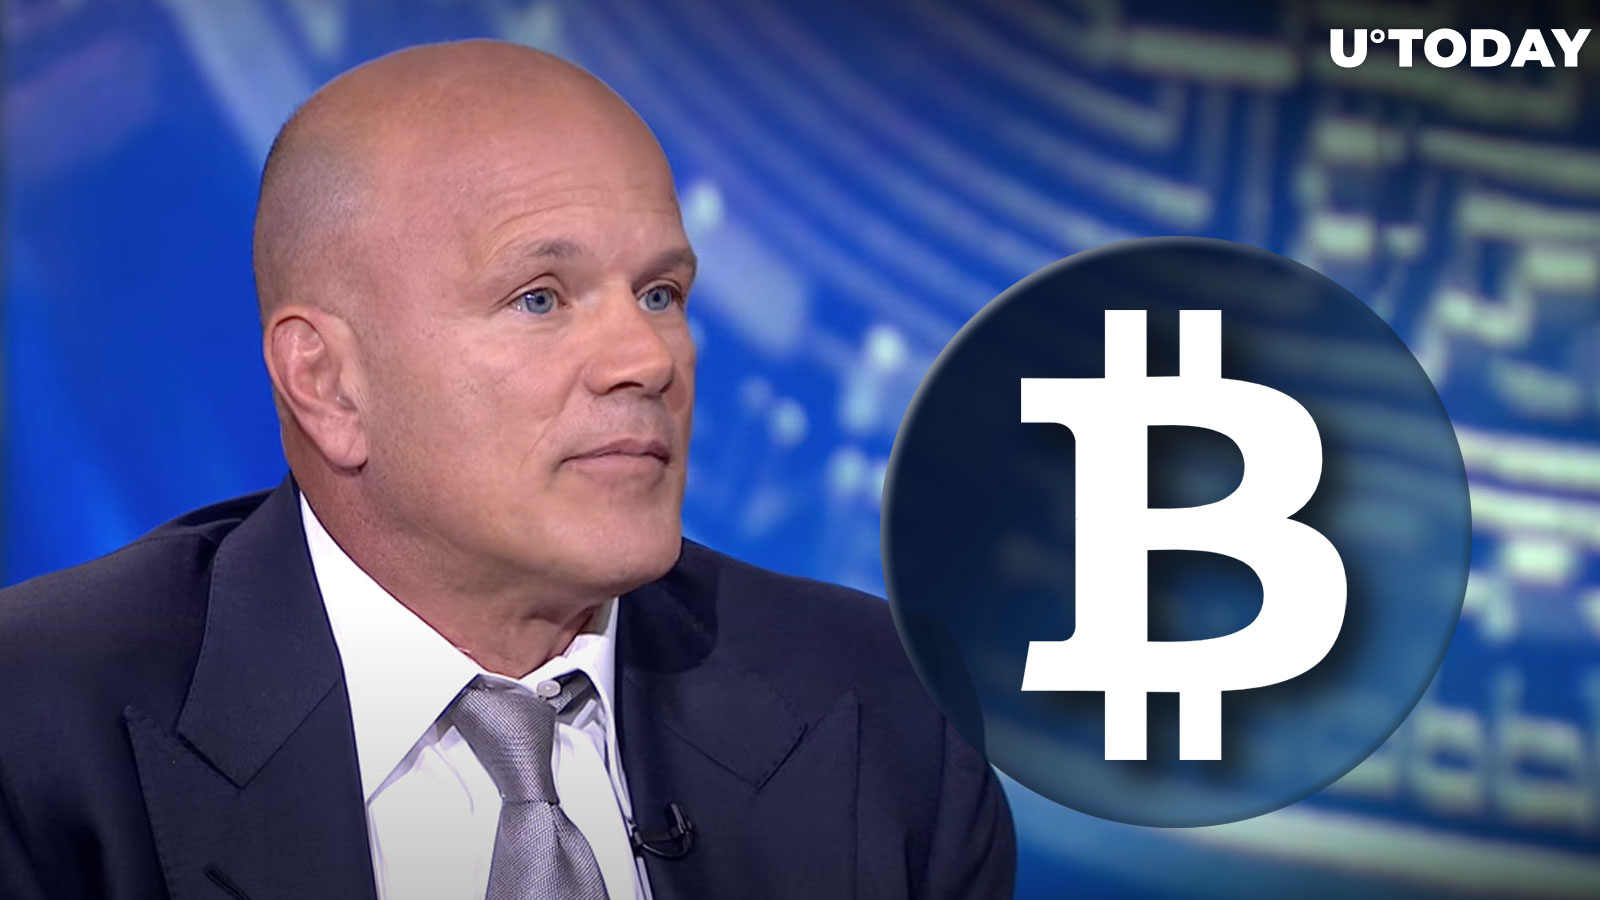 Mike Novogratz Says It's Time to Buy Bitcoin (BTC)